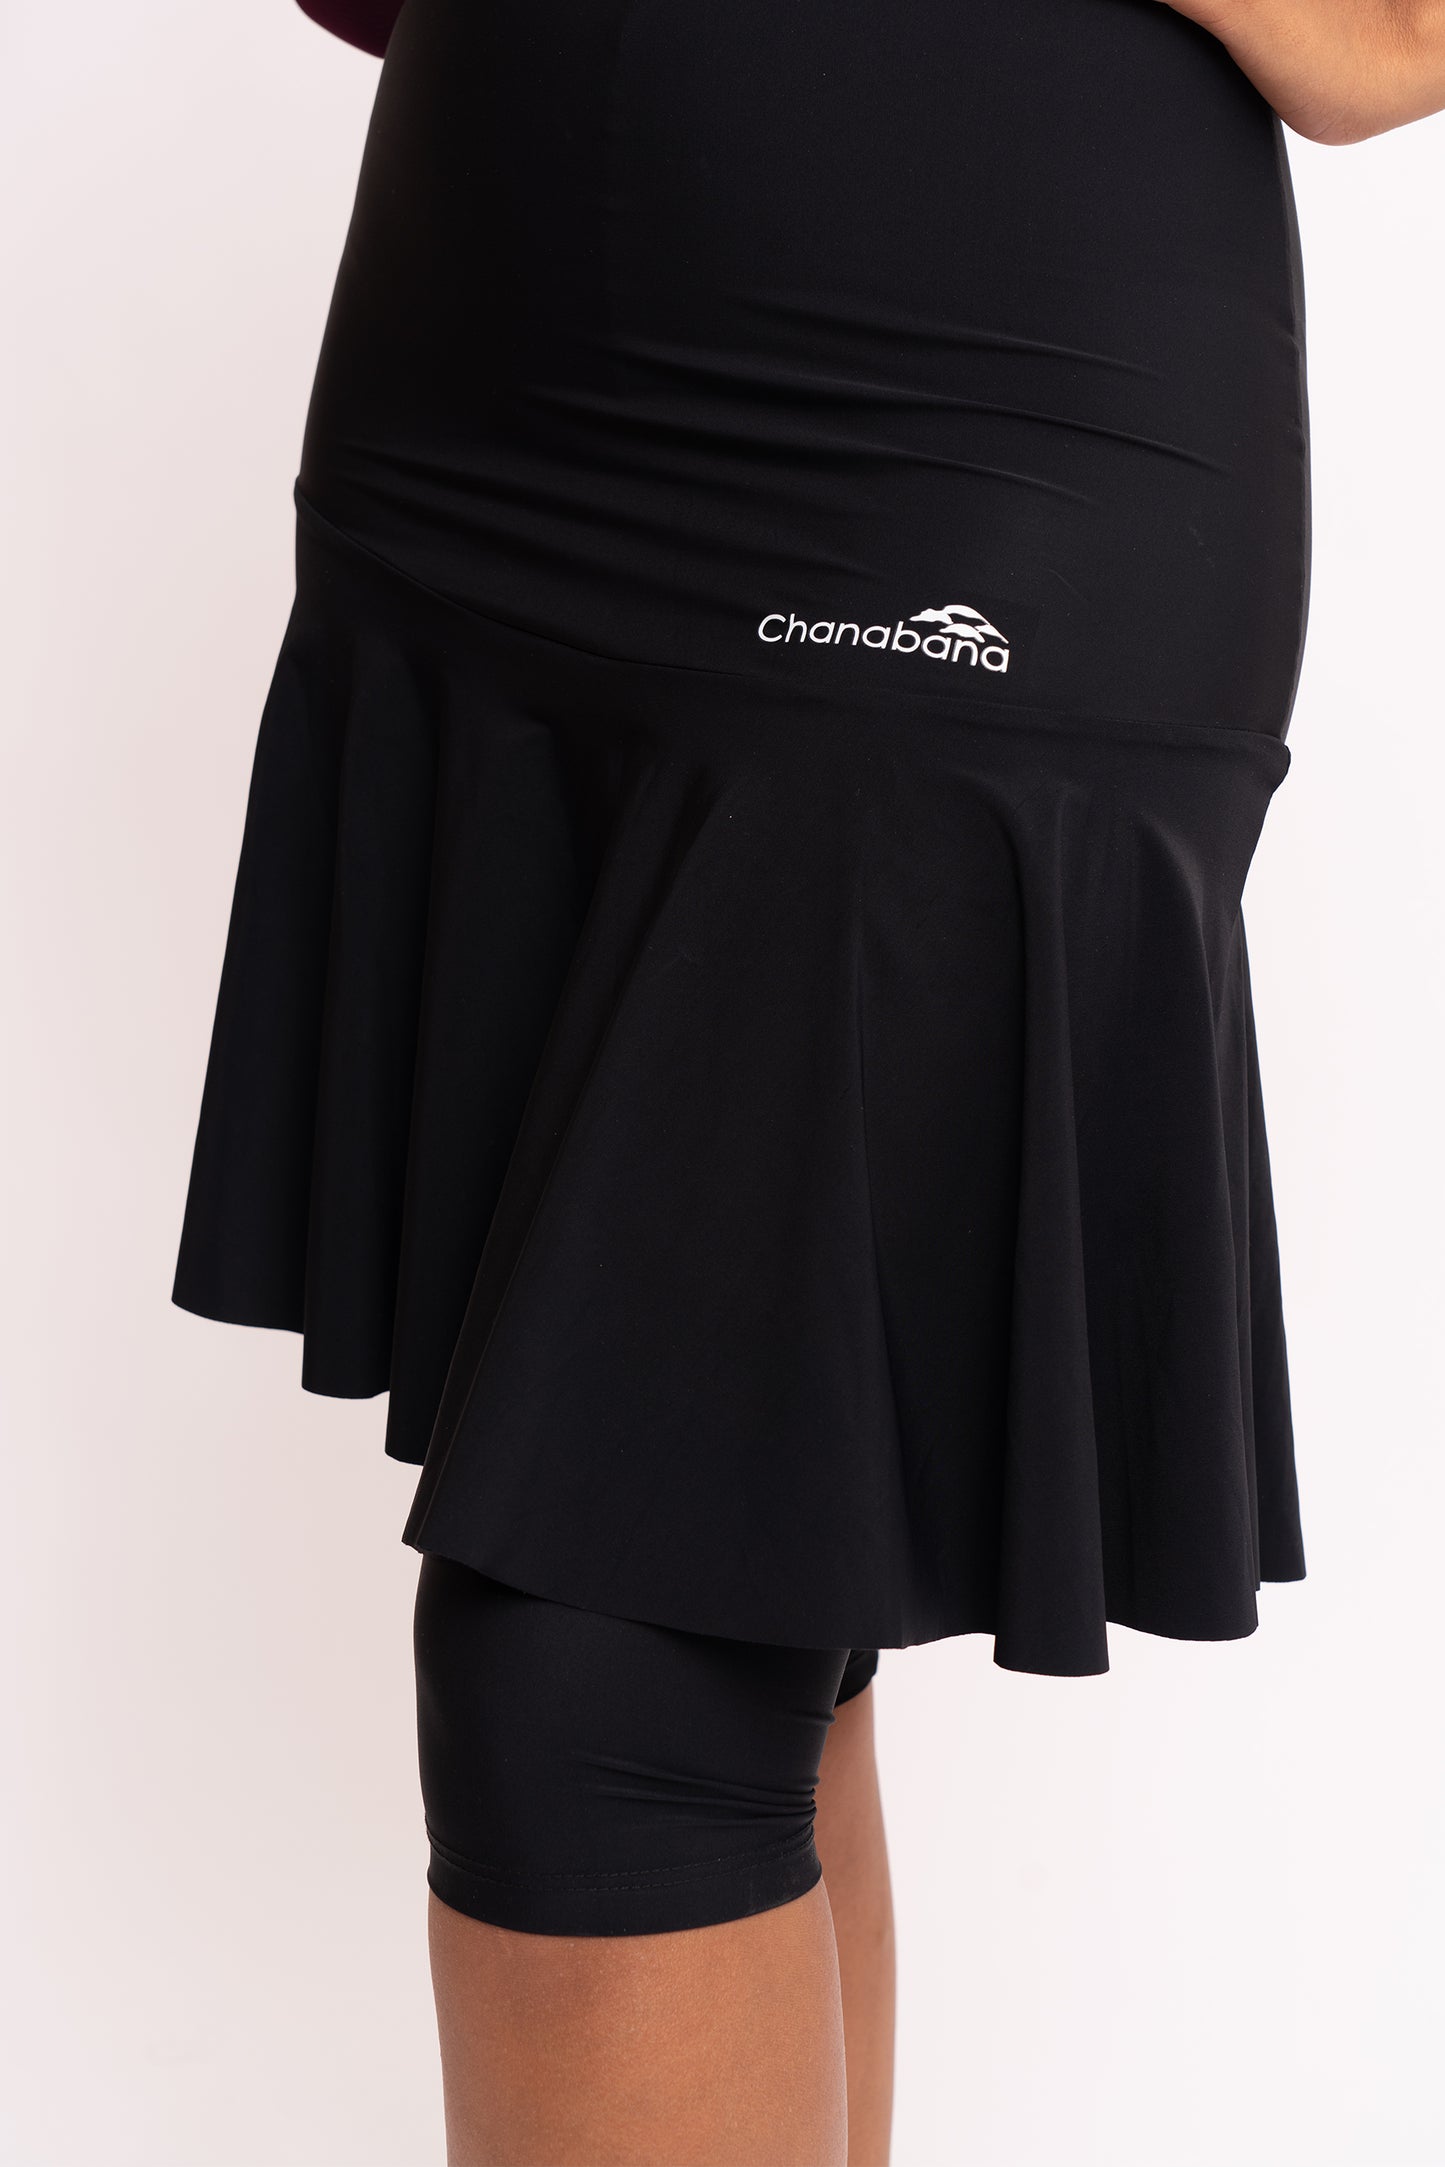 Tennis Flair Skirt - Black